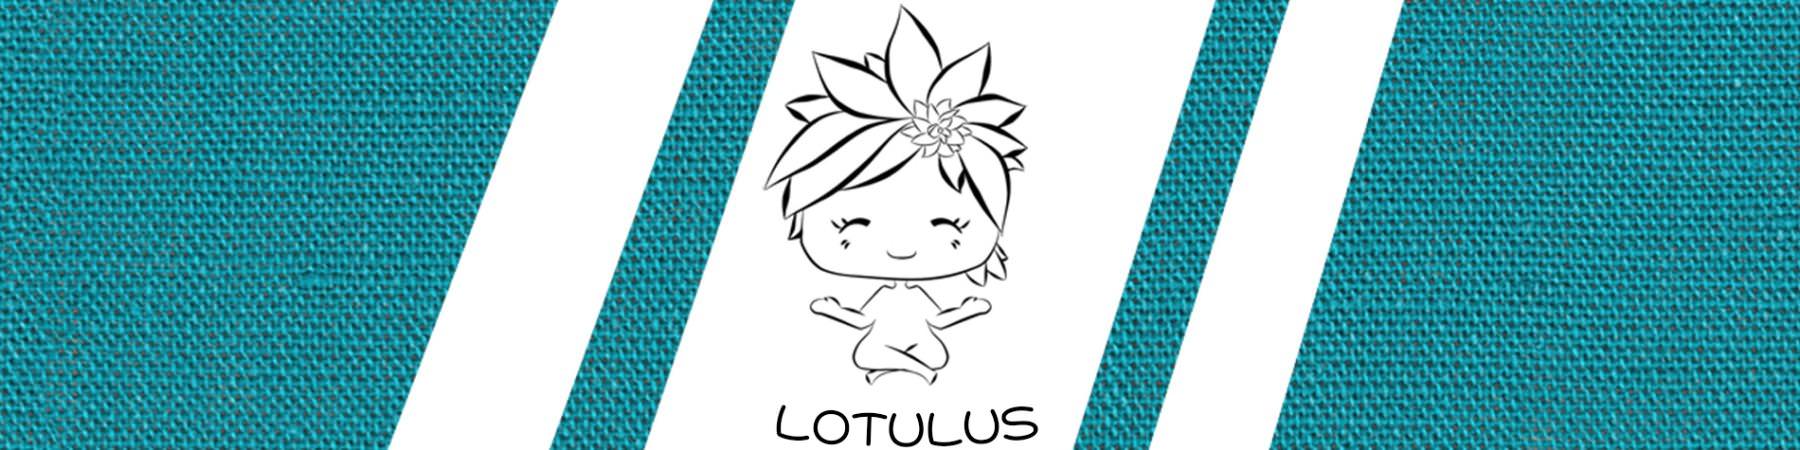 Lotulus_Hintergrundbild_Shop